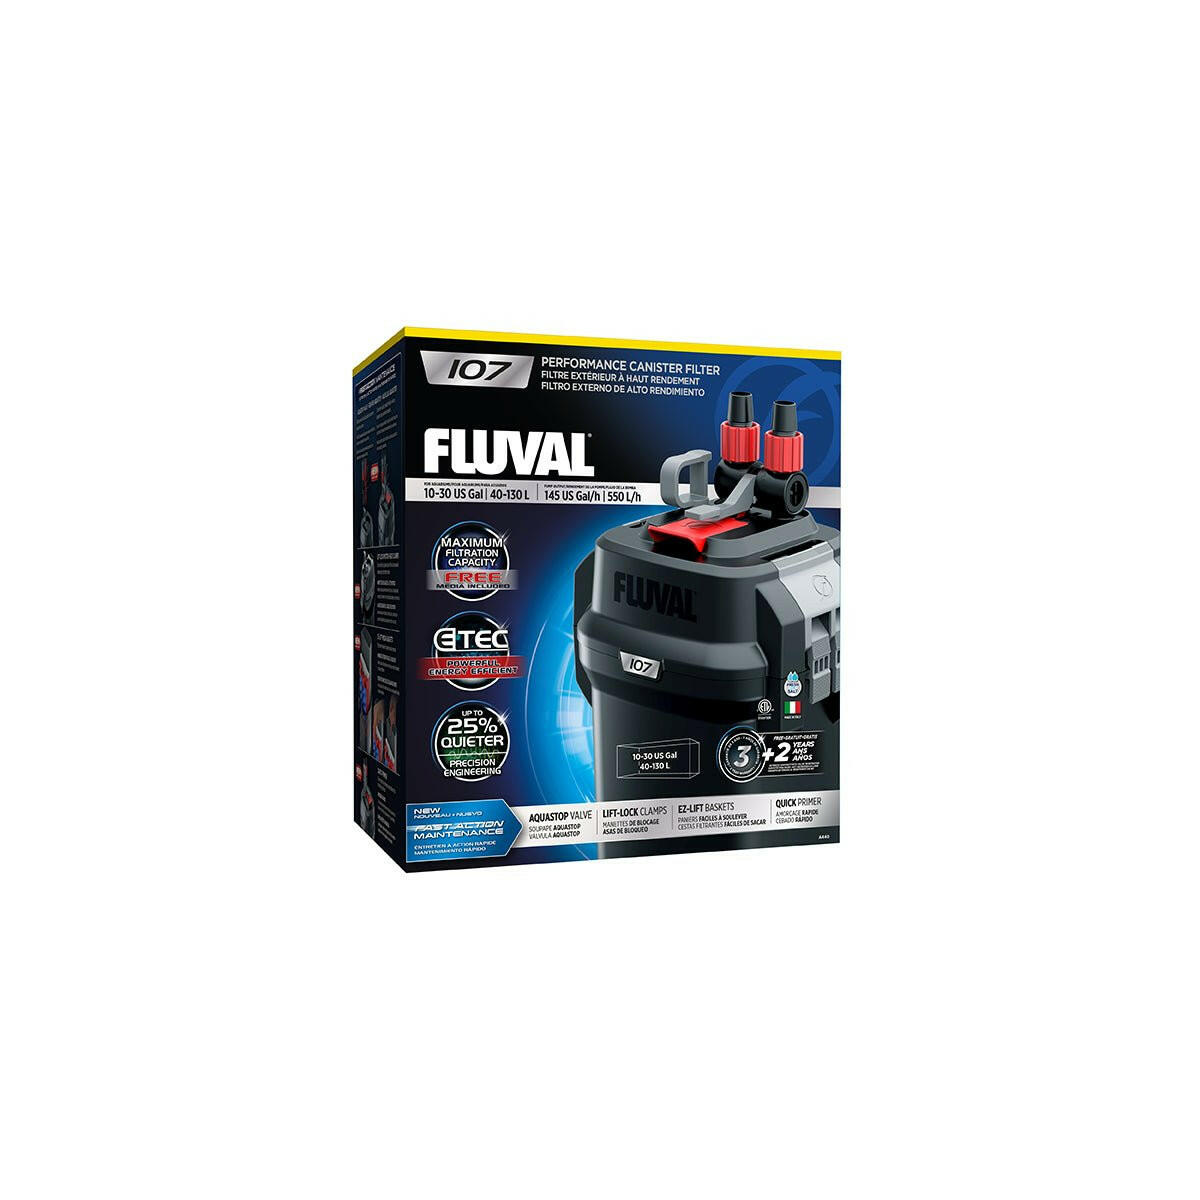 Fluval 107 External Filter - Charterhouse Aquatics